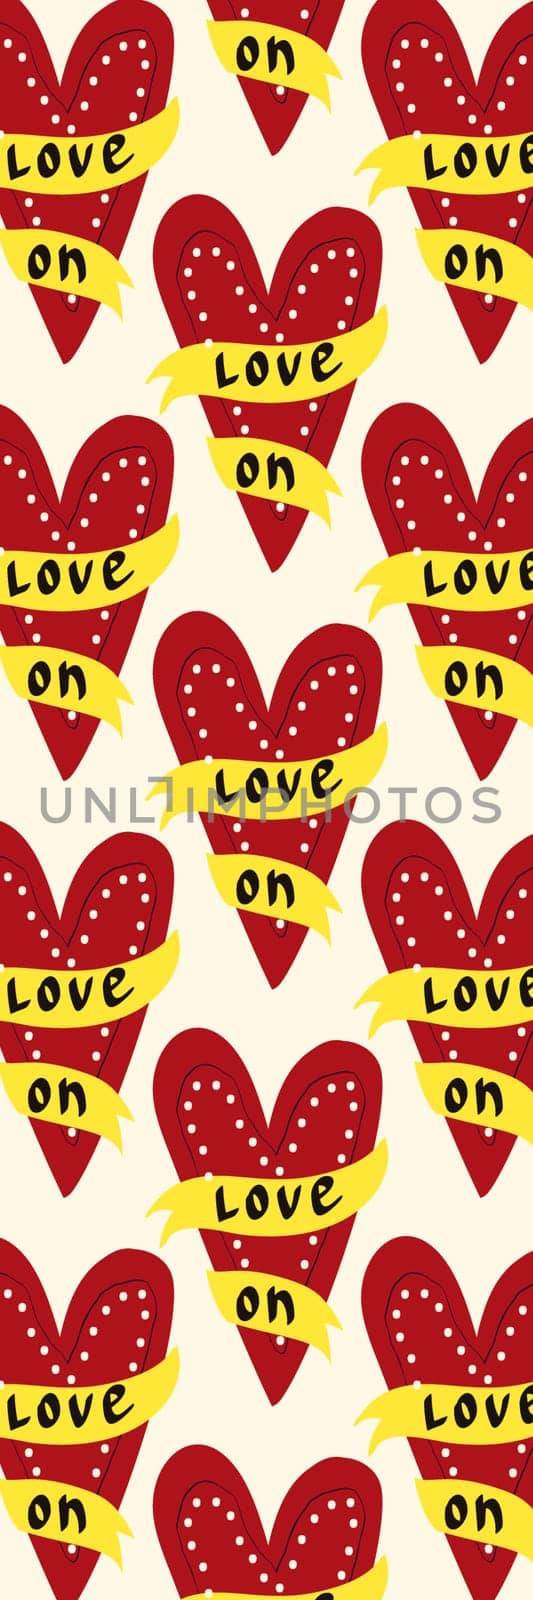 Retro groovy cartoon valentine's day bookmark with hearts